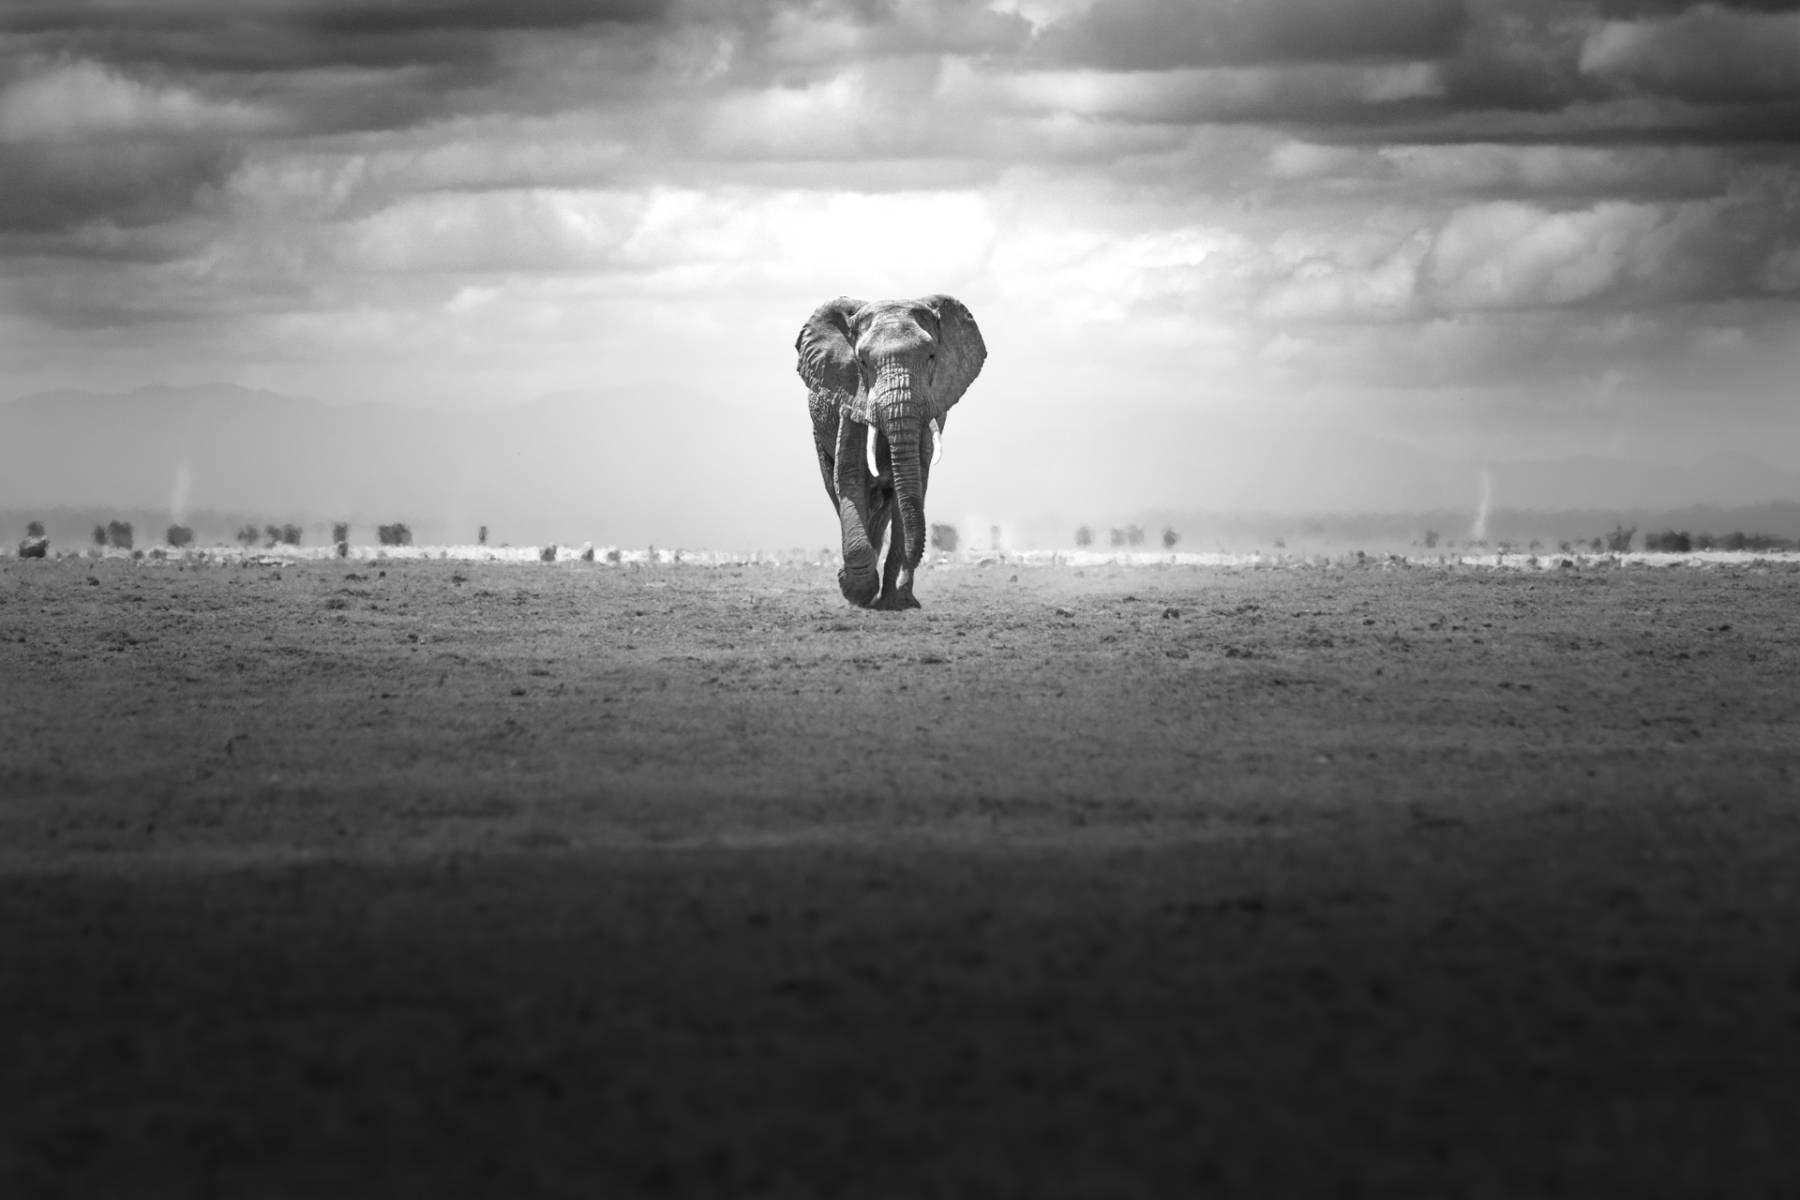 LUXURY SAFARI MAGAZINE INTERVIEWS WORLD RENOWNED WILDLIFE PHOTOGRAPHER - JOHAN SIGGESSON